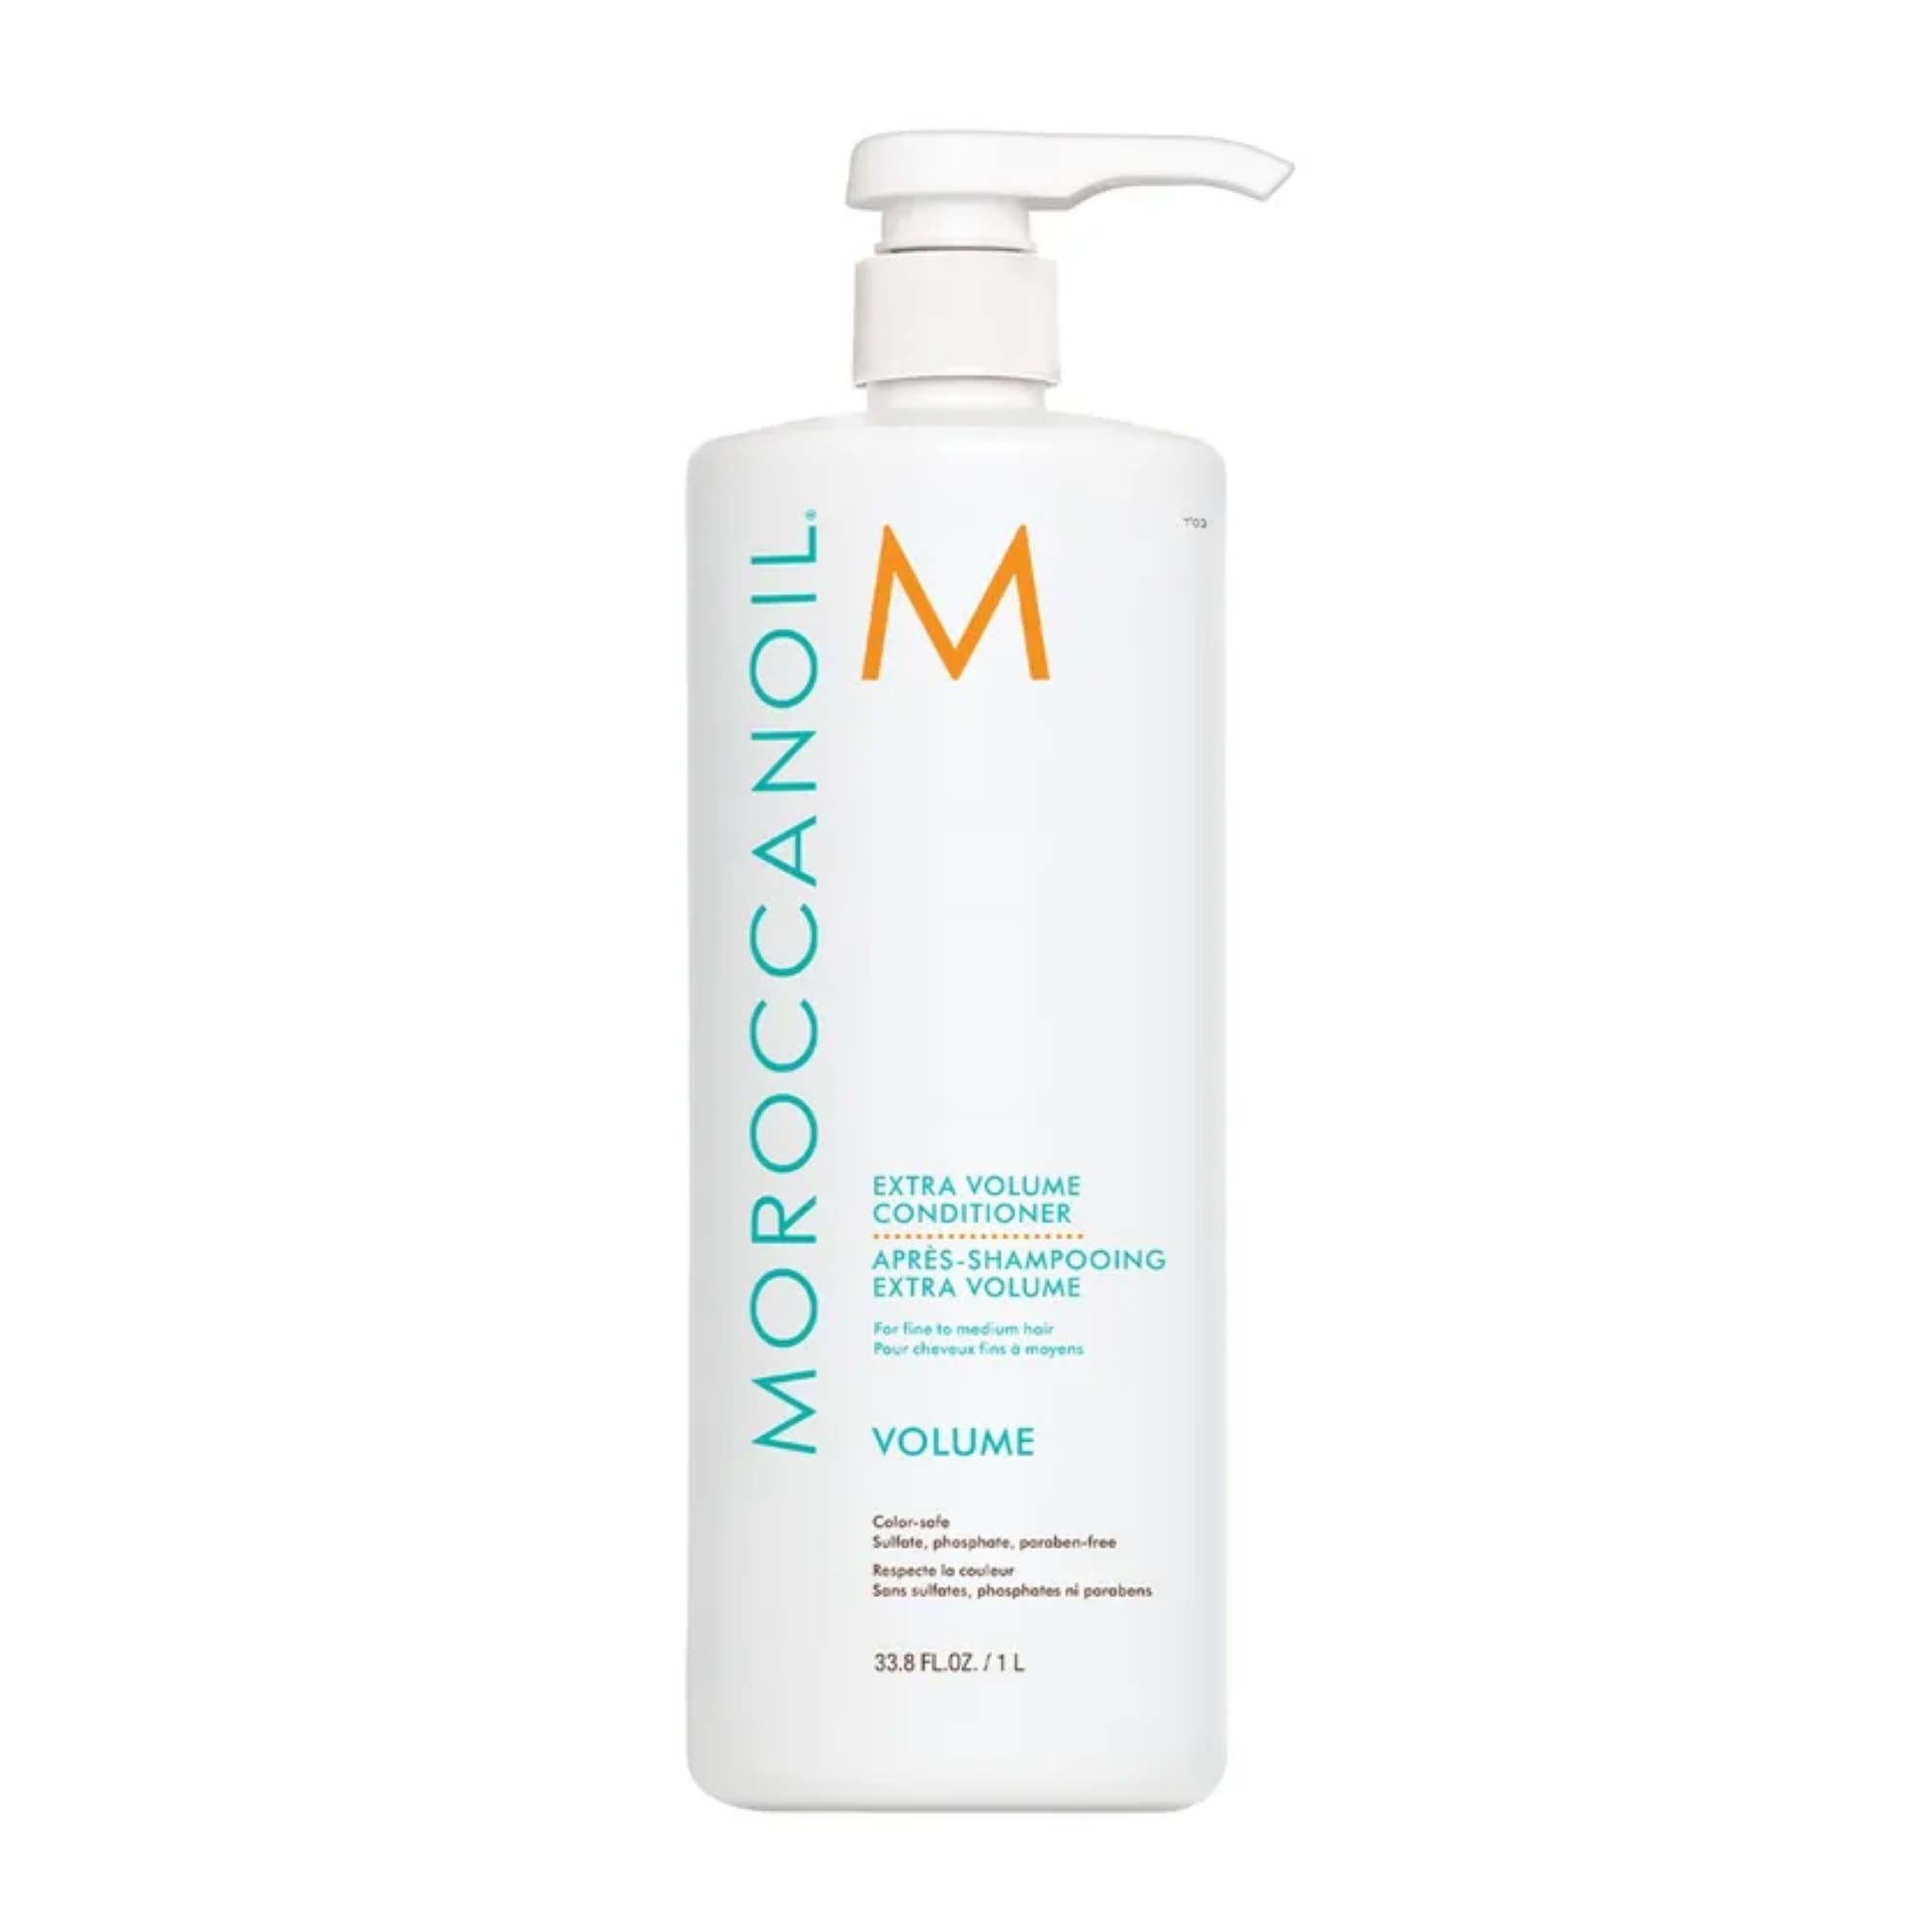 MoroccanOil Extra Volume Shampoo & Conditioner Liter Duo ($150 VALUE)